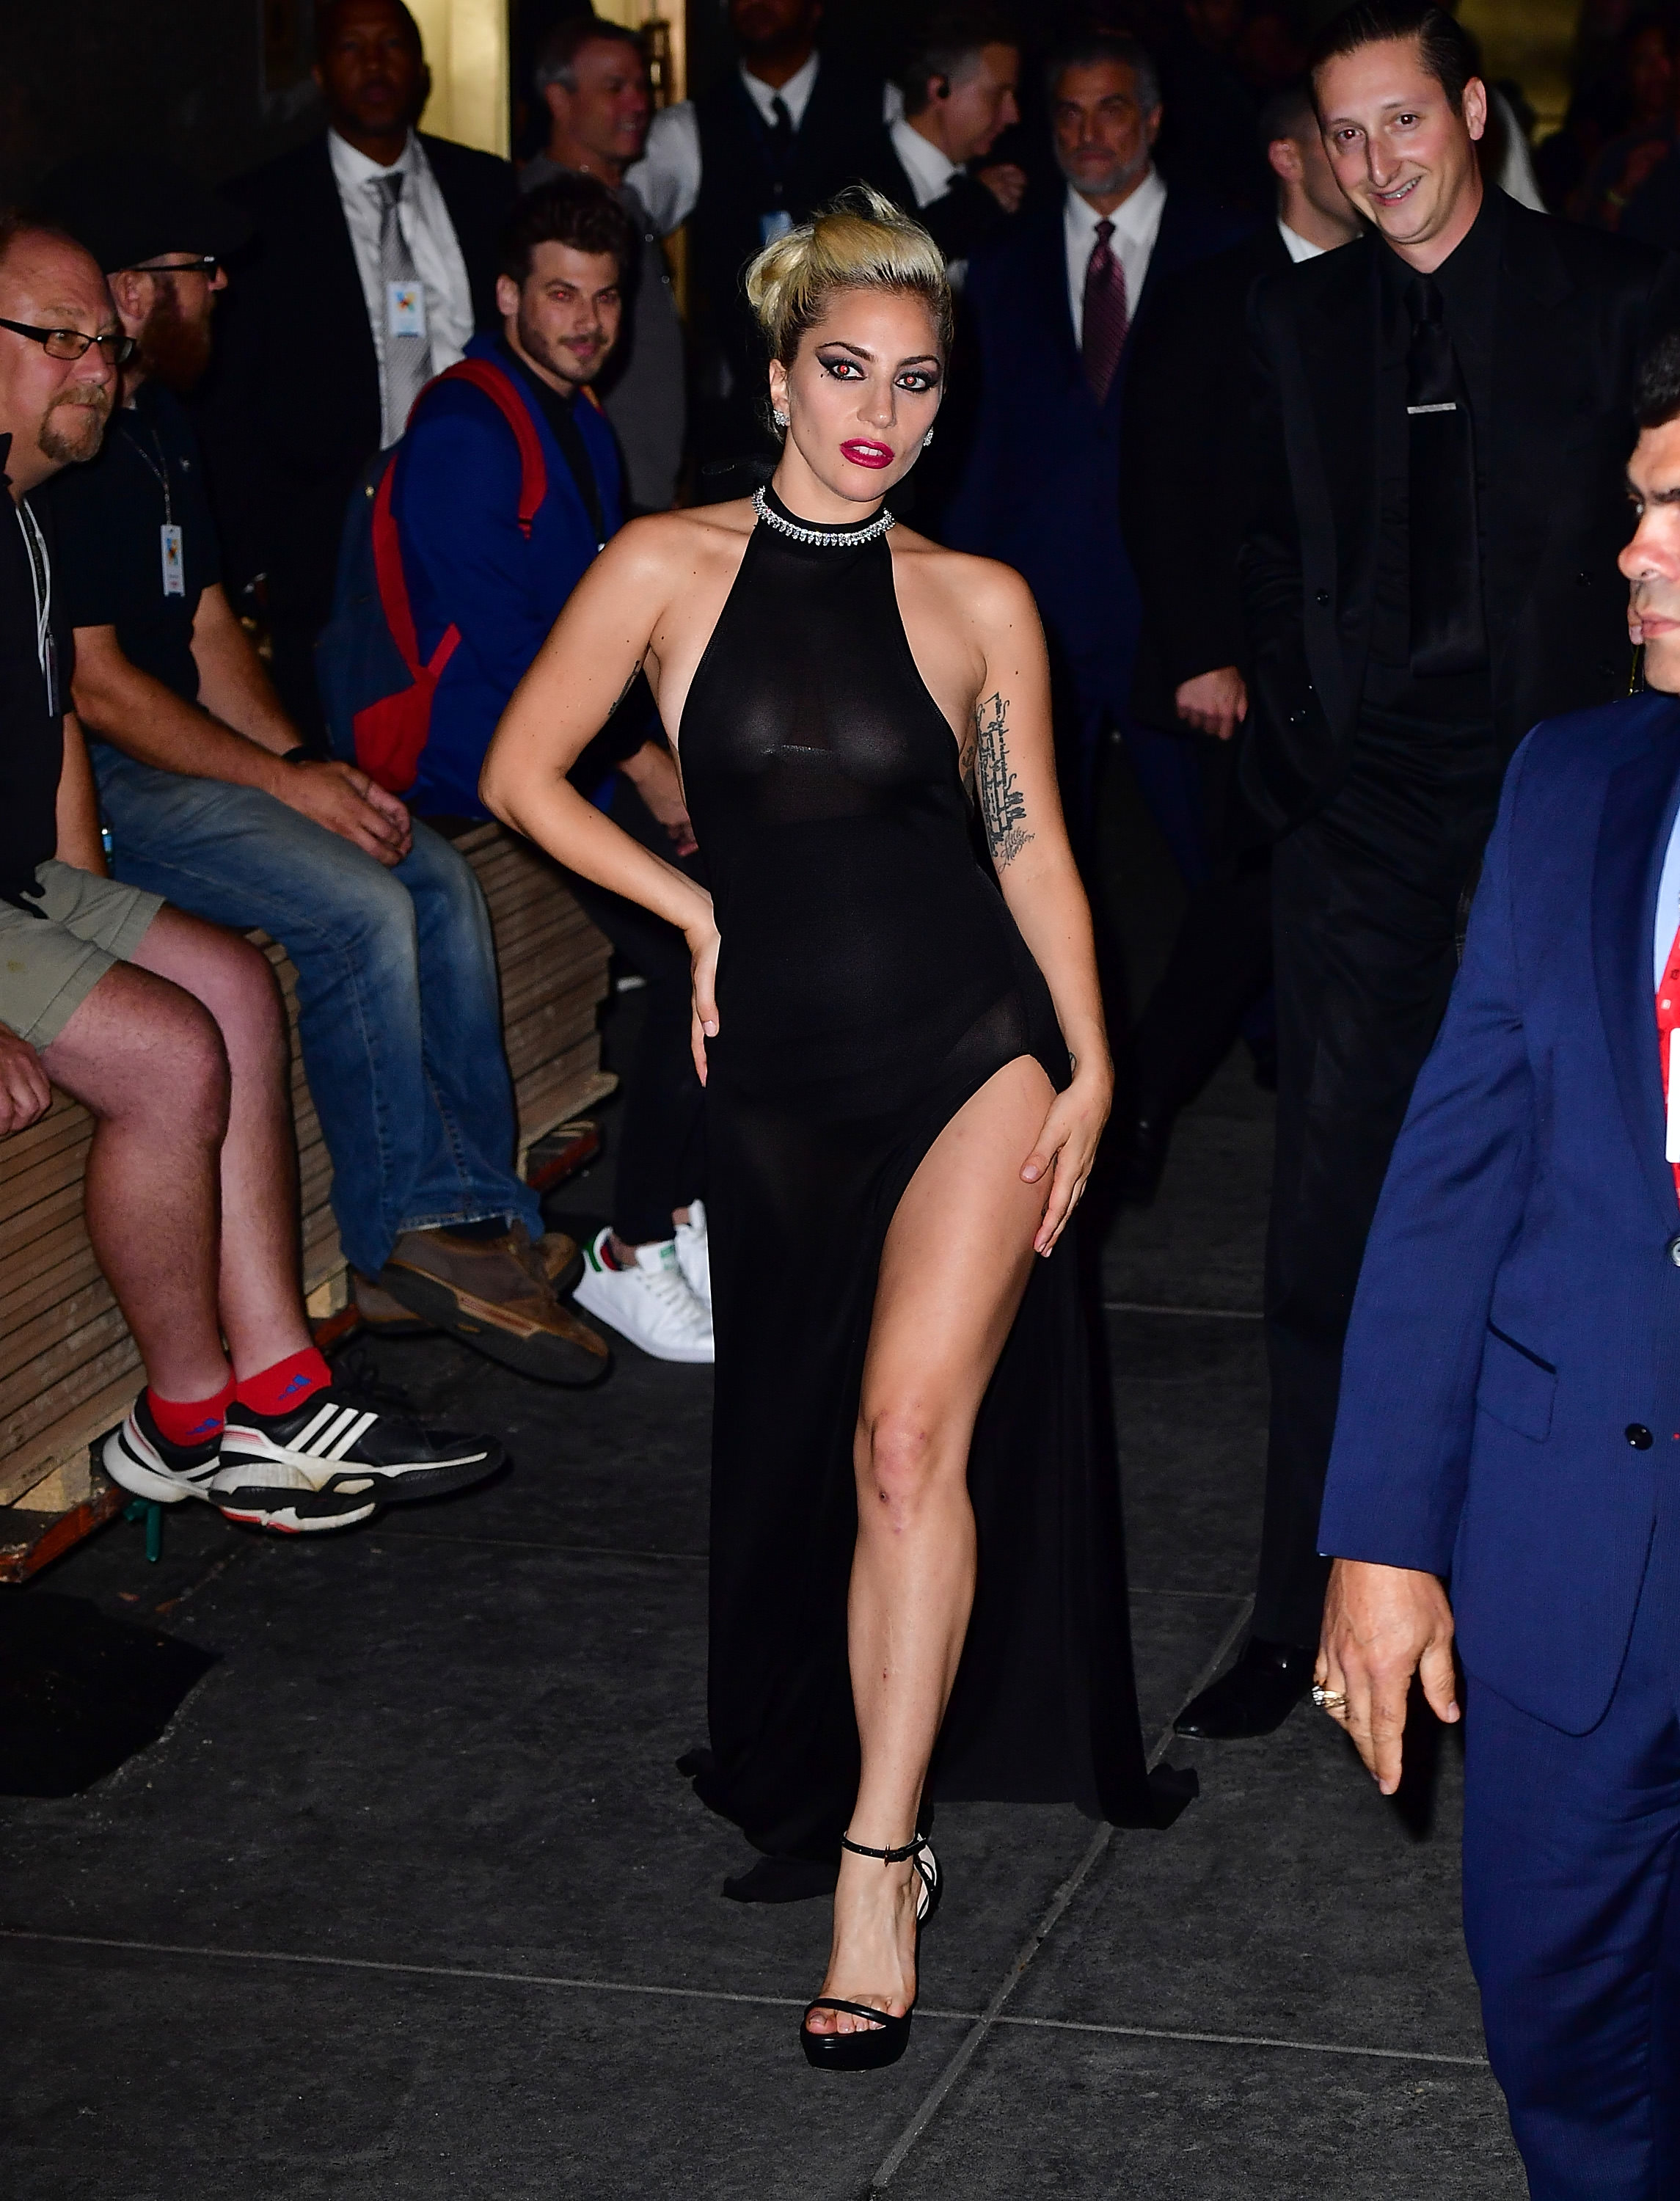 Braless Photos of Lady Gaga